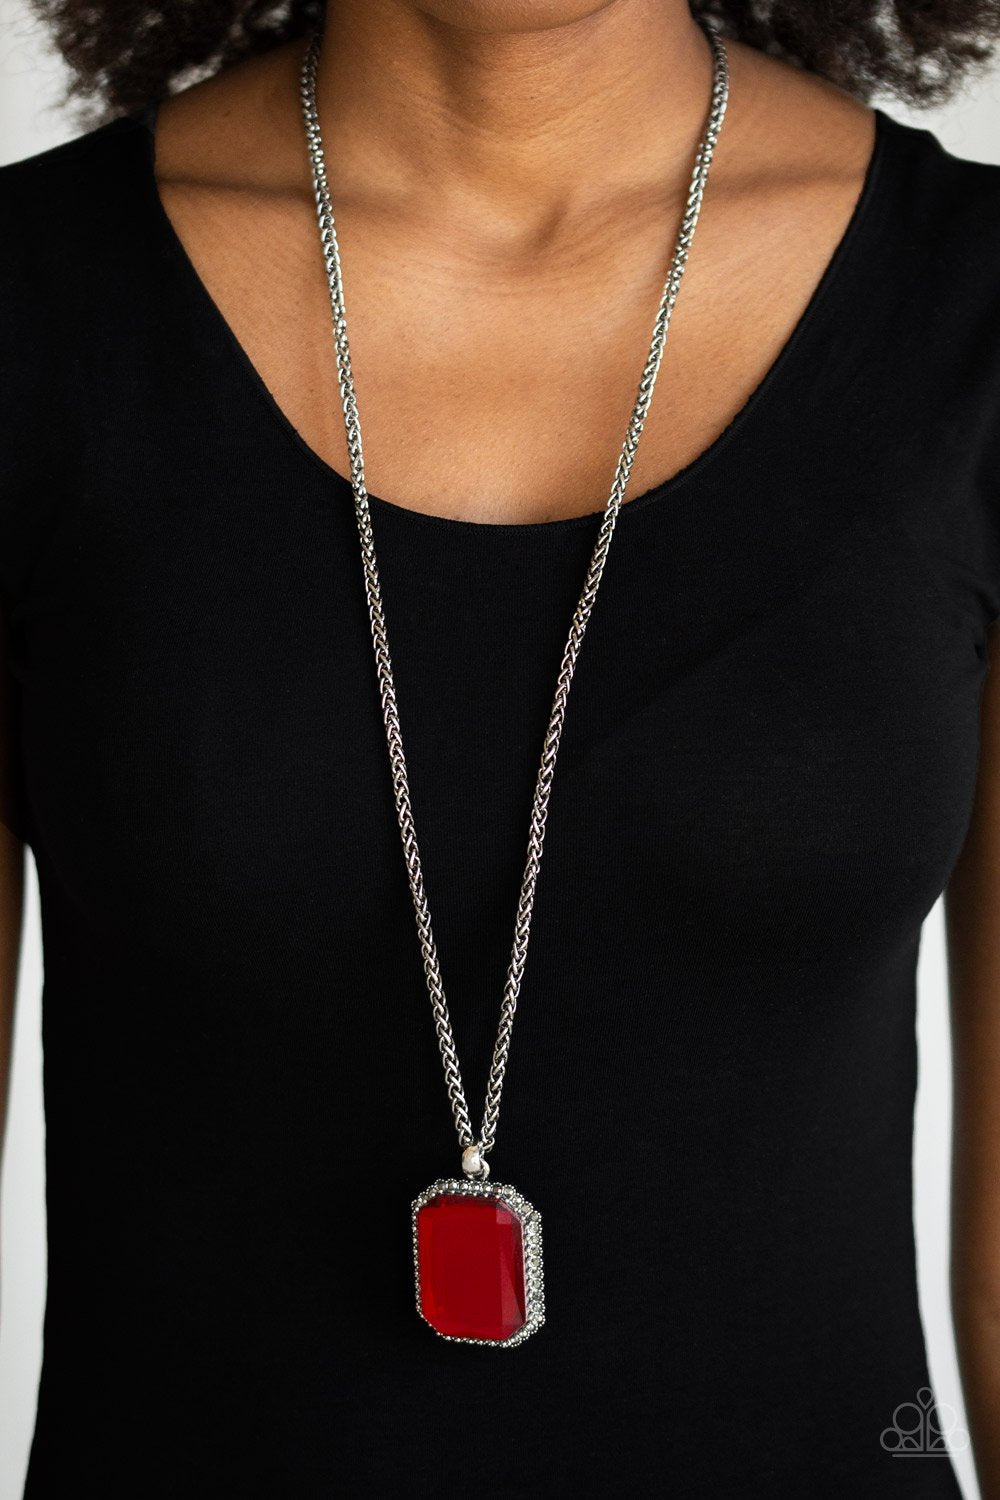 Let Your HEIR Down Red
Necklace - Daria's Blings N Things